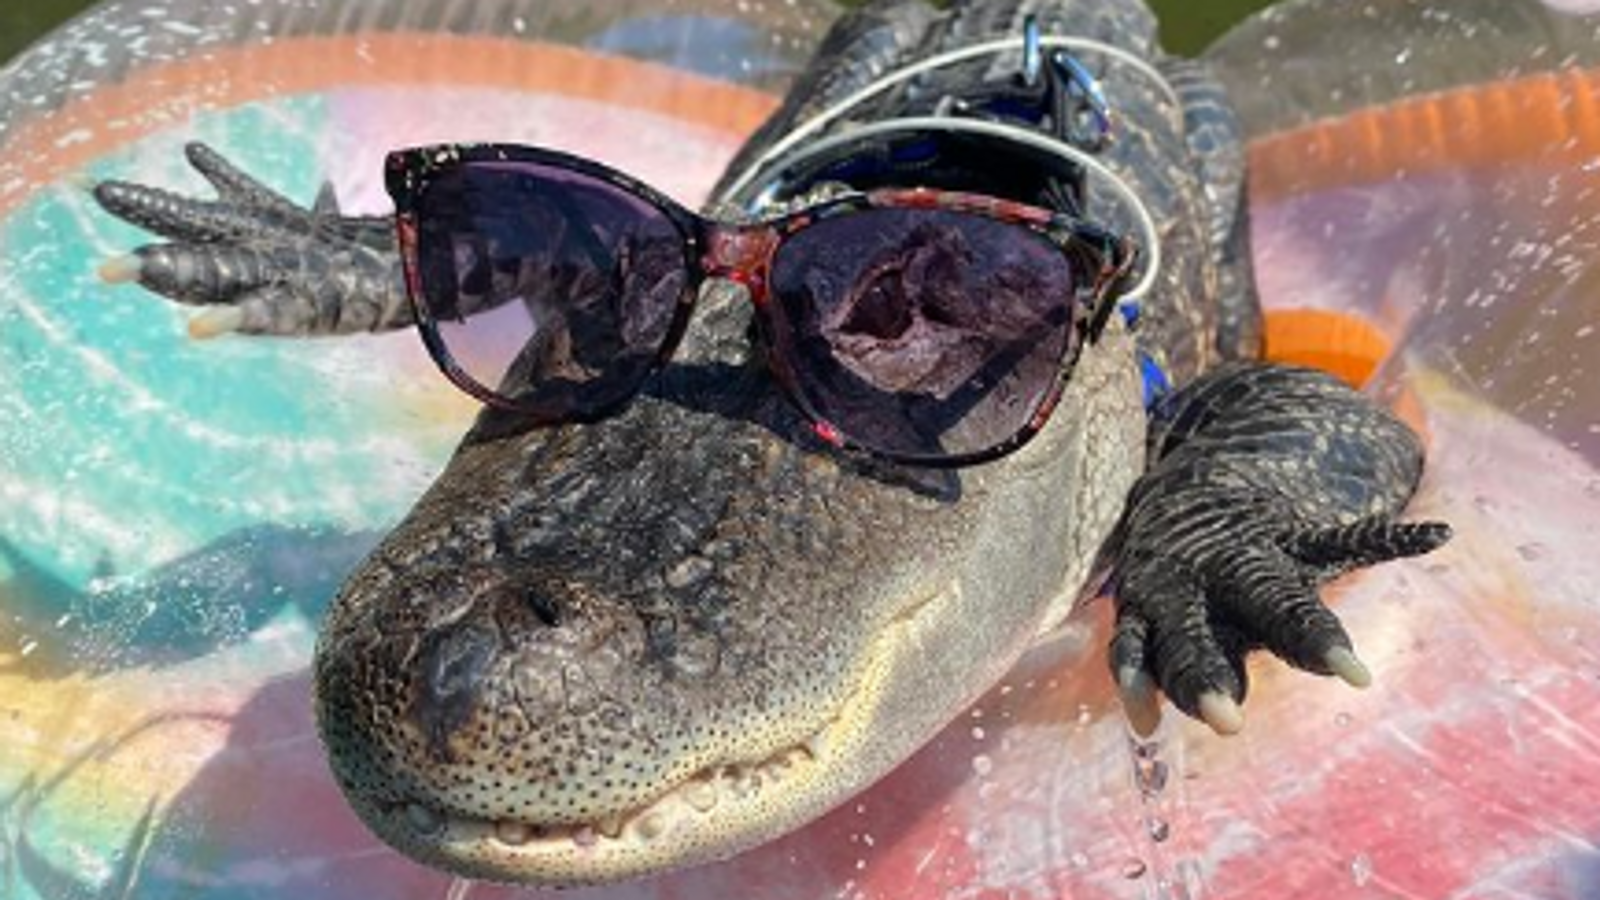 ‘Emotional support’ alligator denied entry into baseball stadium | US News